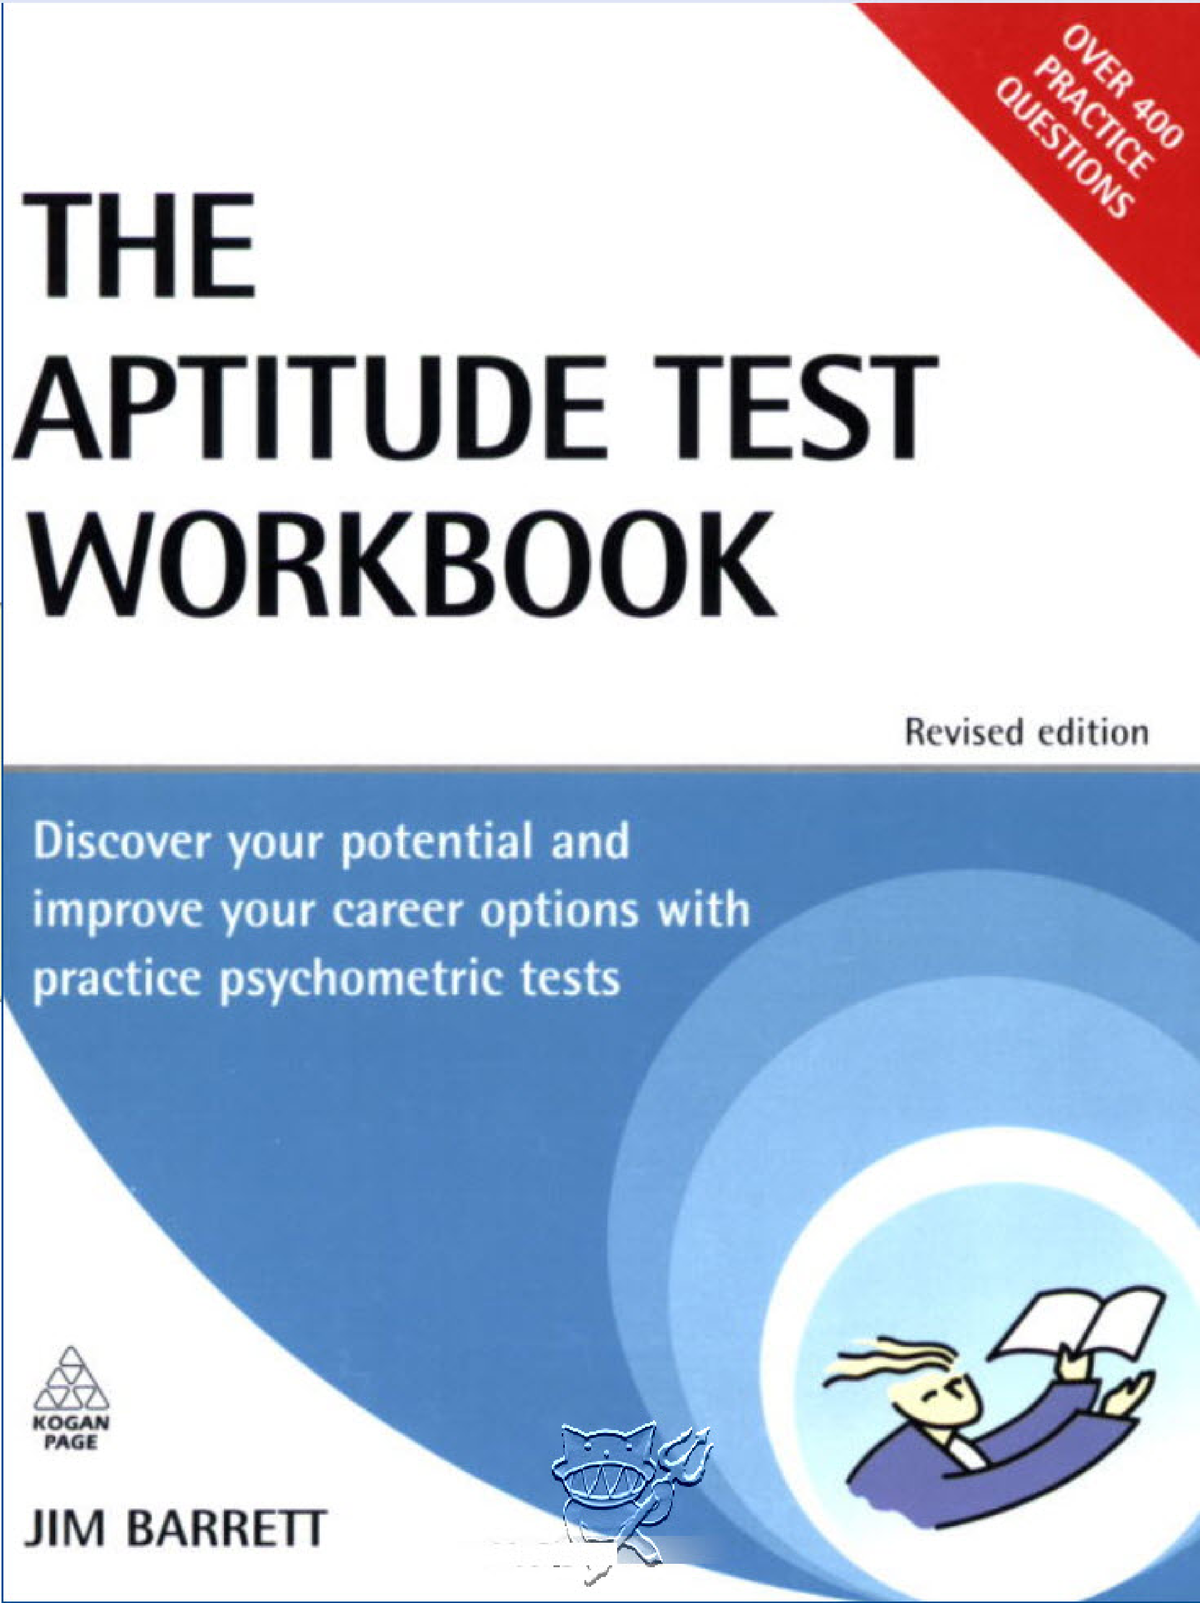 THE Aptitude TEST Workbook I THE APTITUDE TEST WORKBOOK JIM BARRETT Revised Edition THE